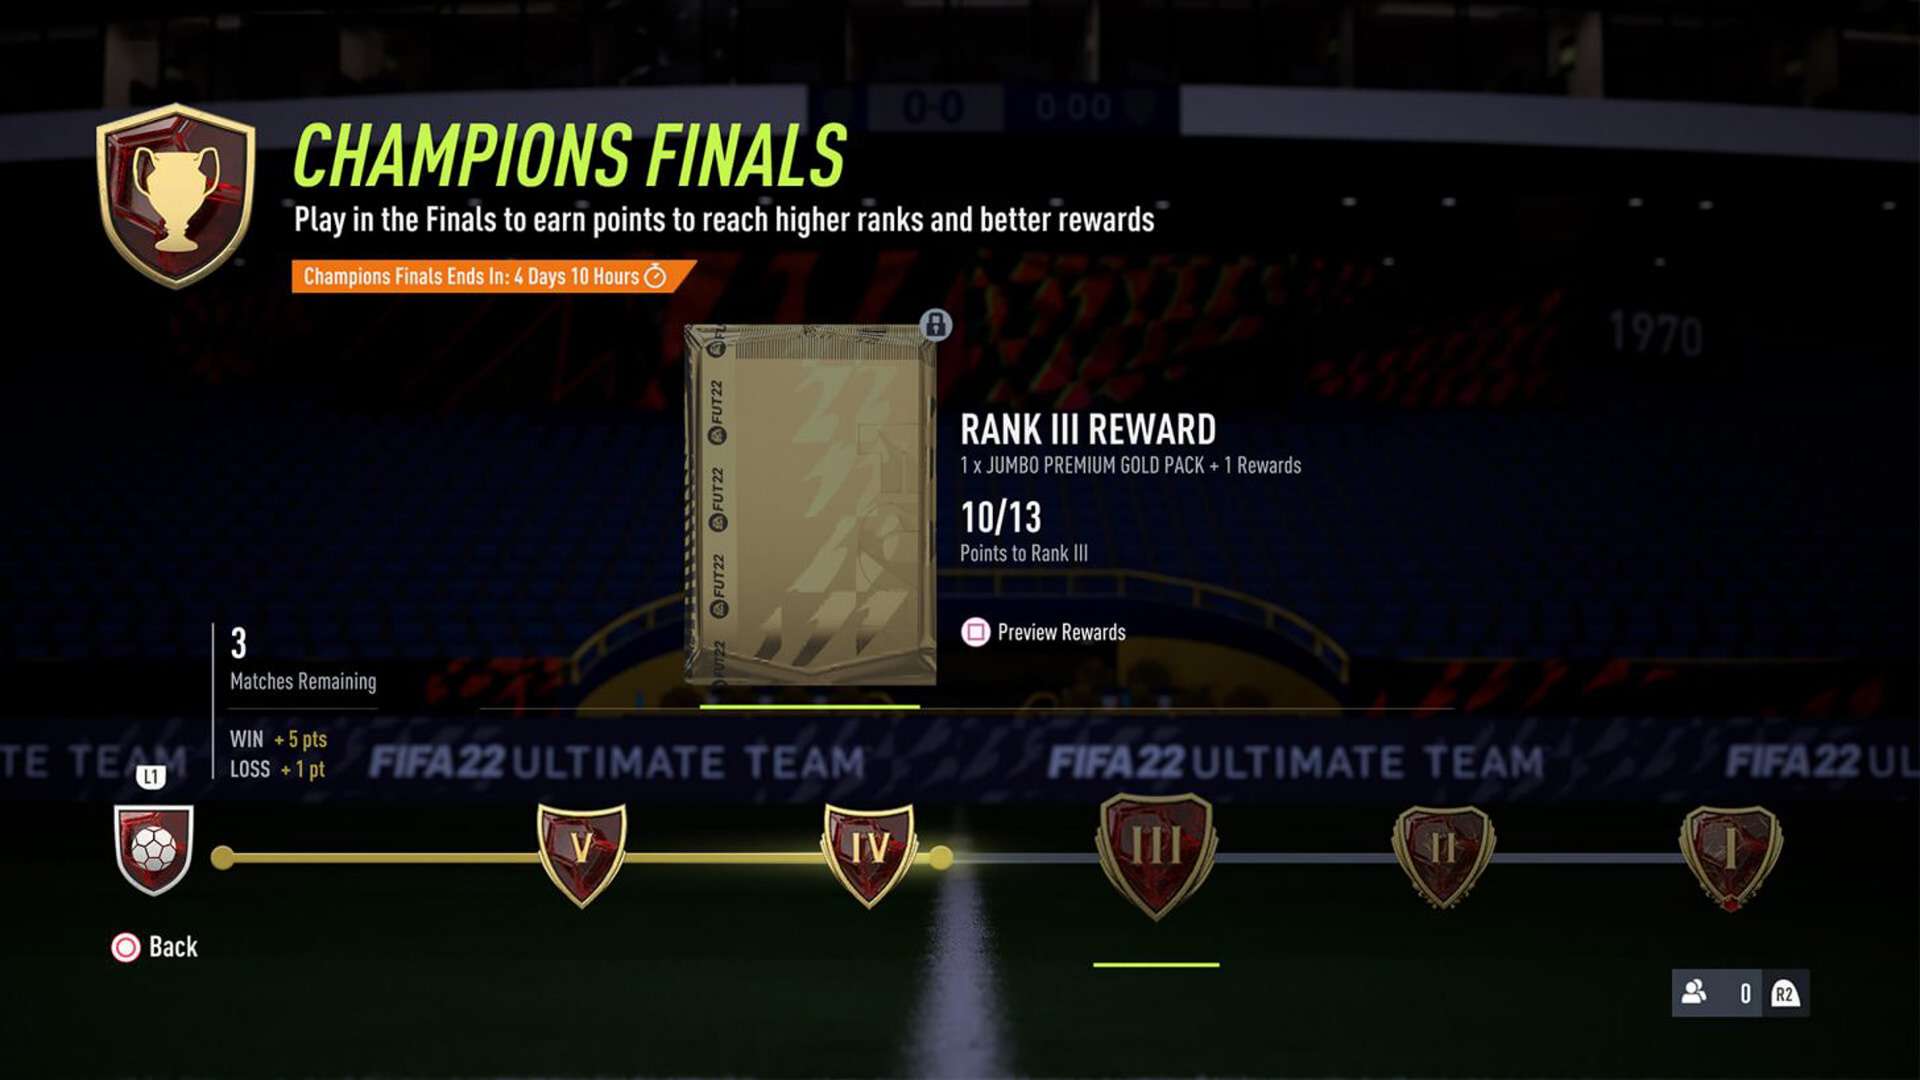 FIFA 22 Ultimate Team FUT Champions Finals